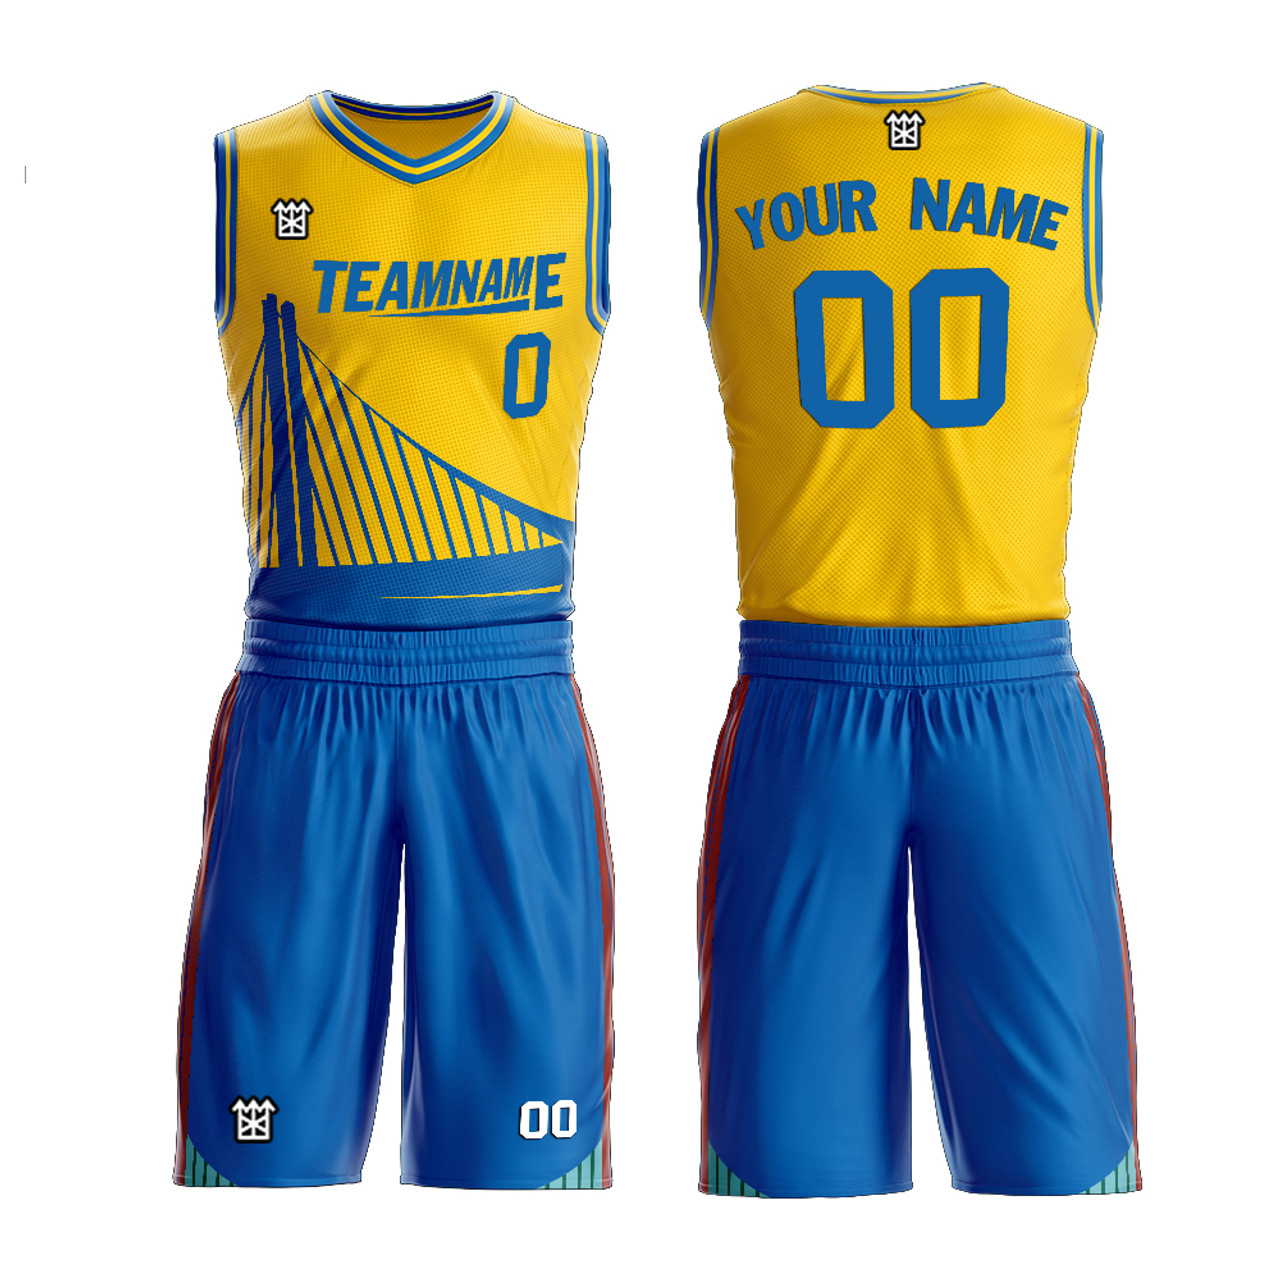 Youth Basketball Shirts Man's Custom Basketball Wear Latest For